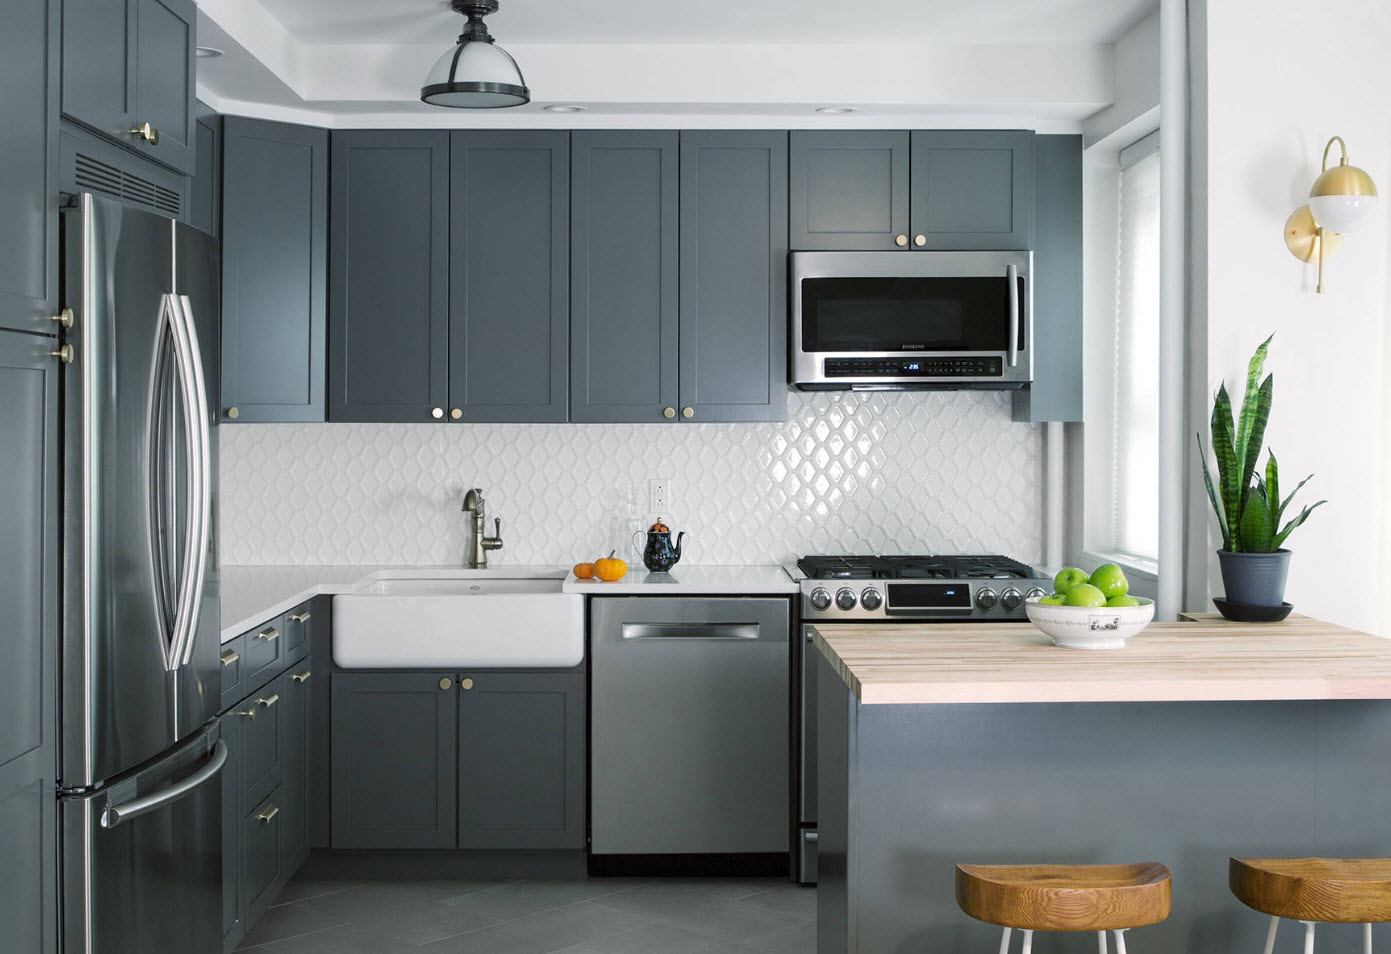 120 Square Feet Kitchen Interior Design Ideas with Photos